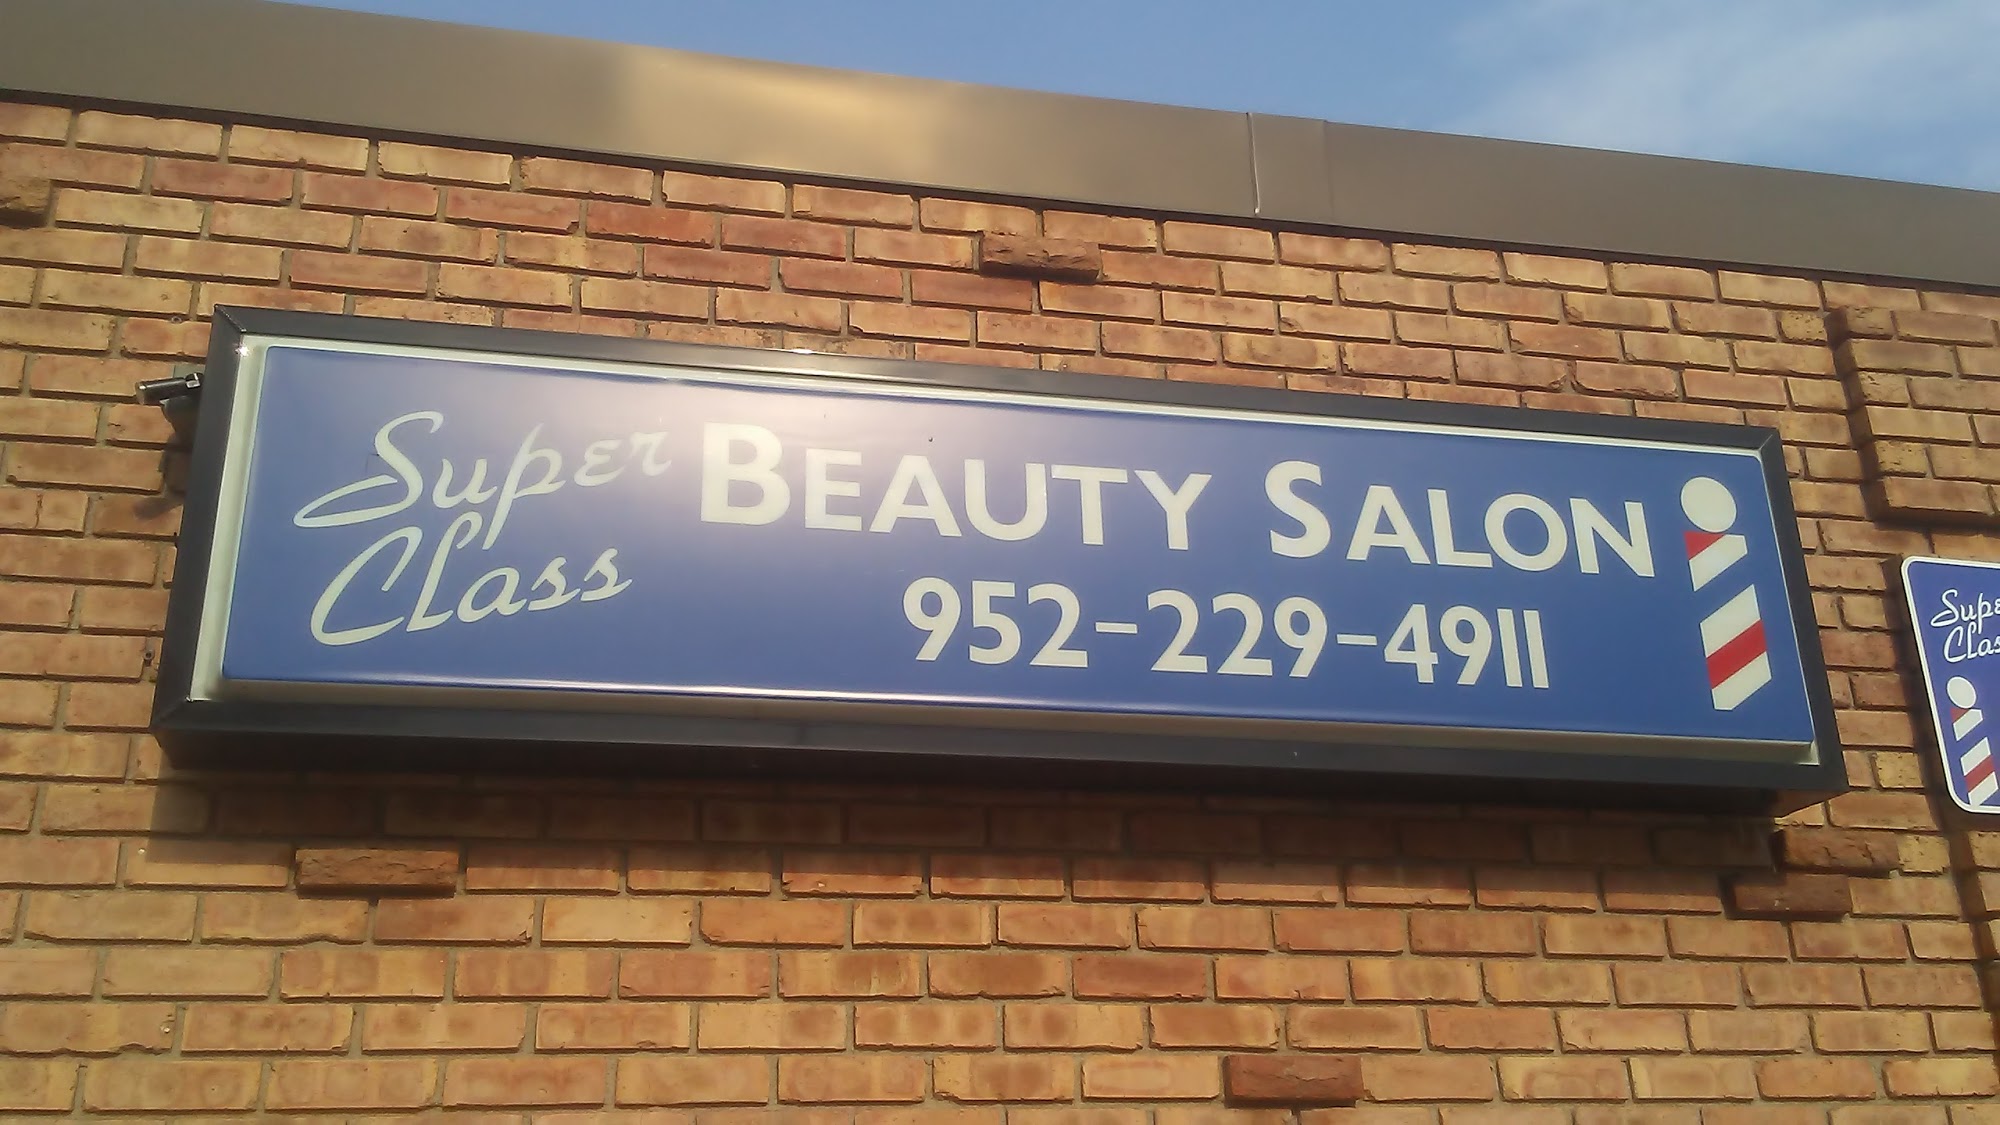 Superclassbeauty salon